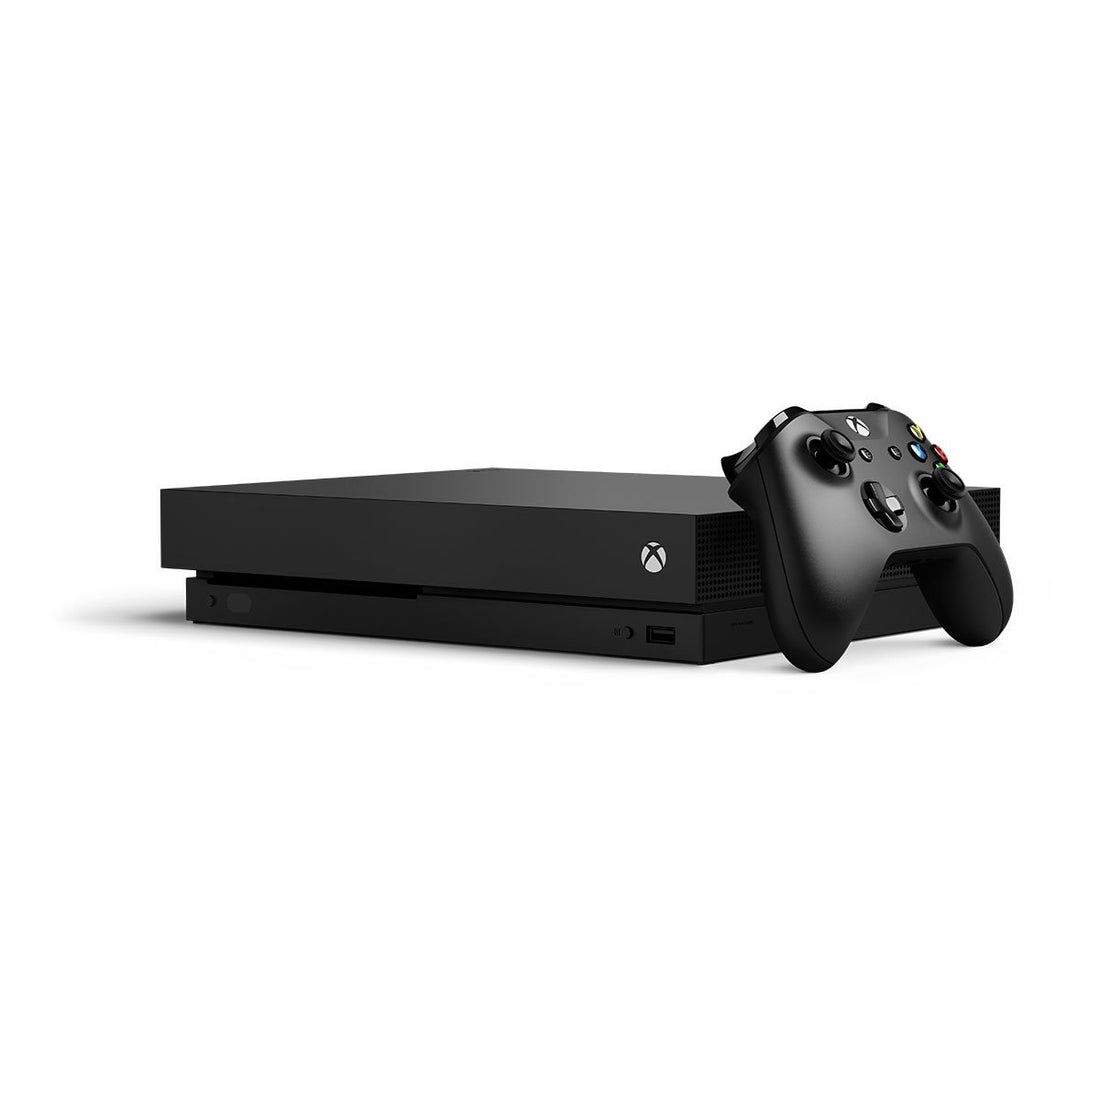 Microsoft Xbox One X Console, 500GB Storage with Accessories - Black (Refurbished)